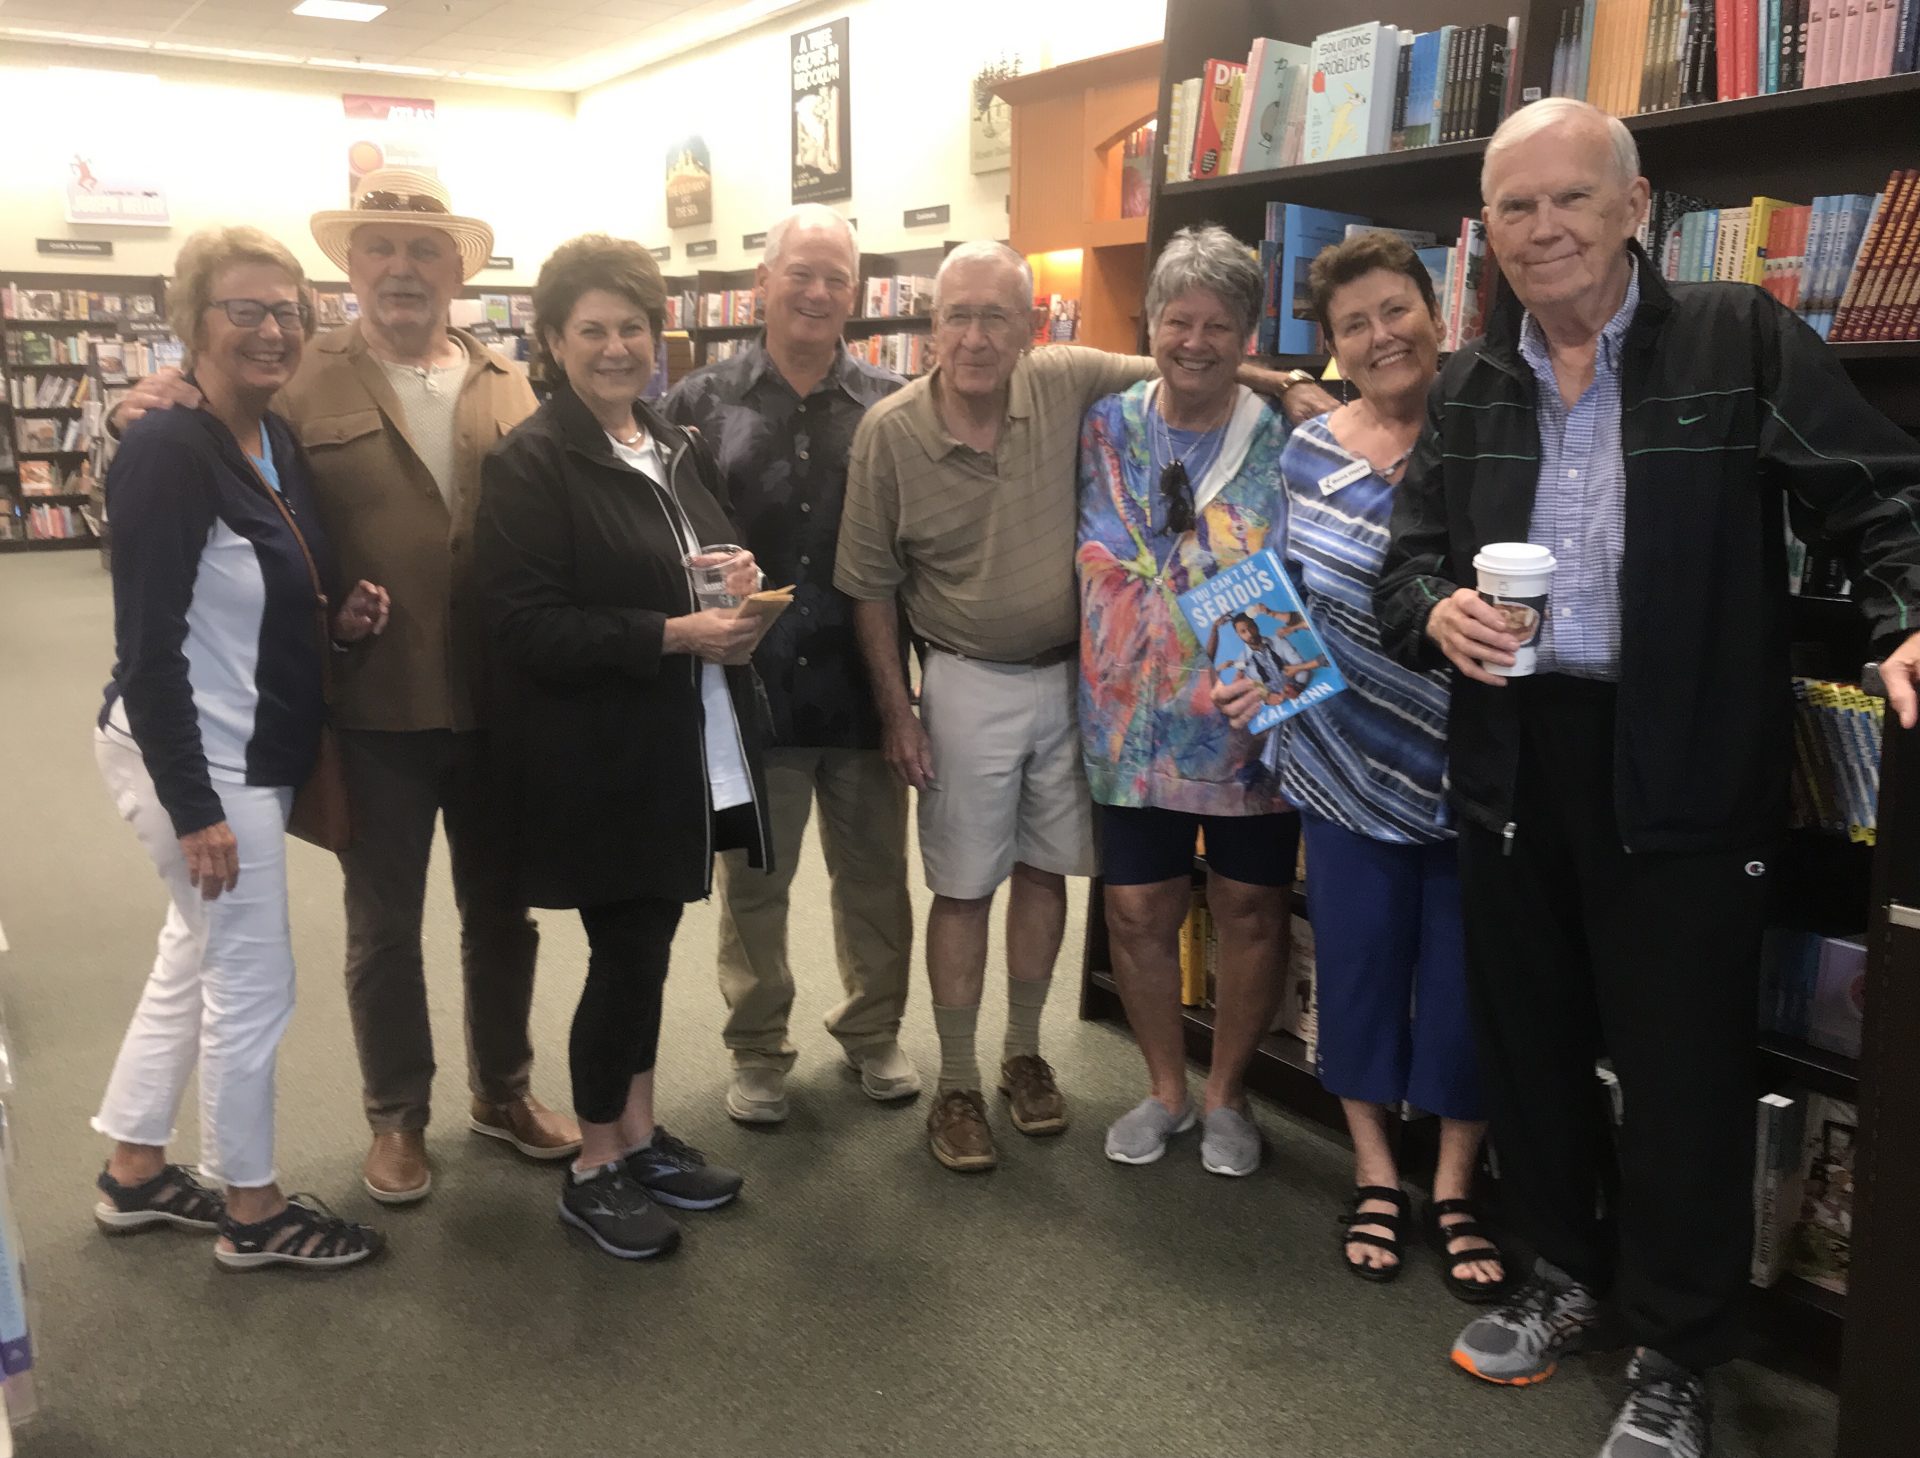 Patrick’s Editing Group celebrating his book at Barnes and Noble